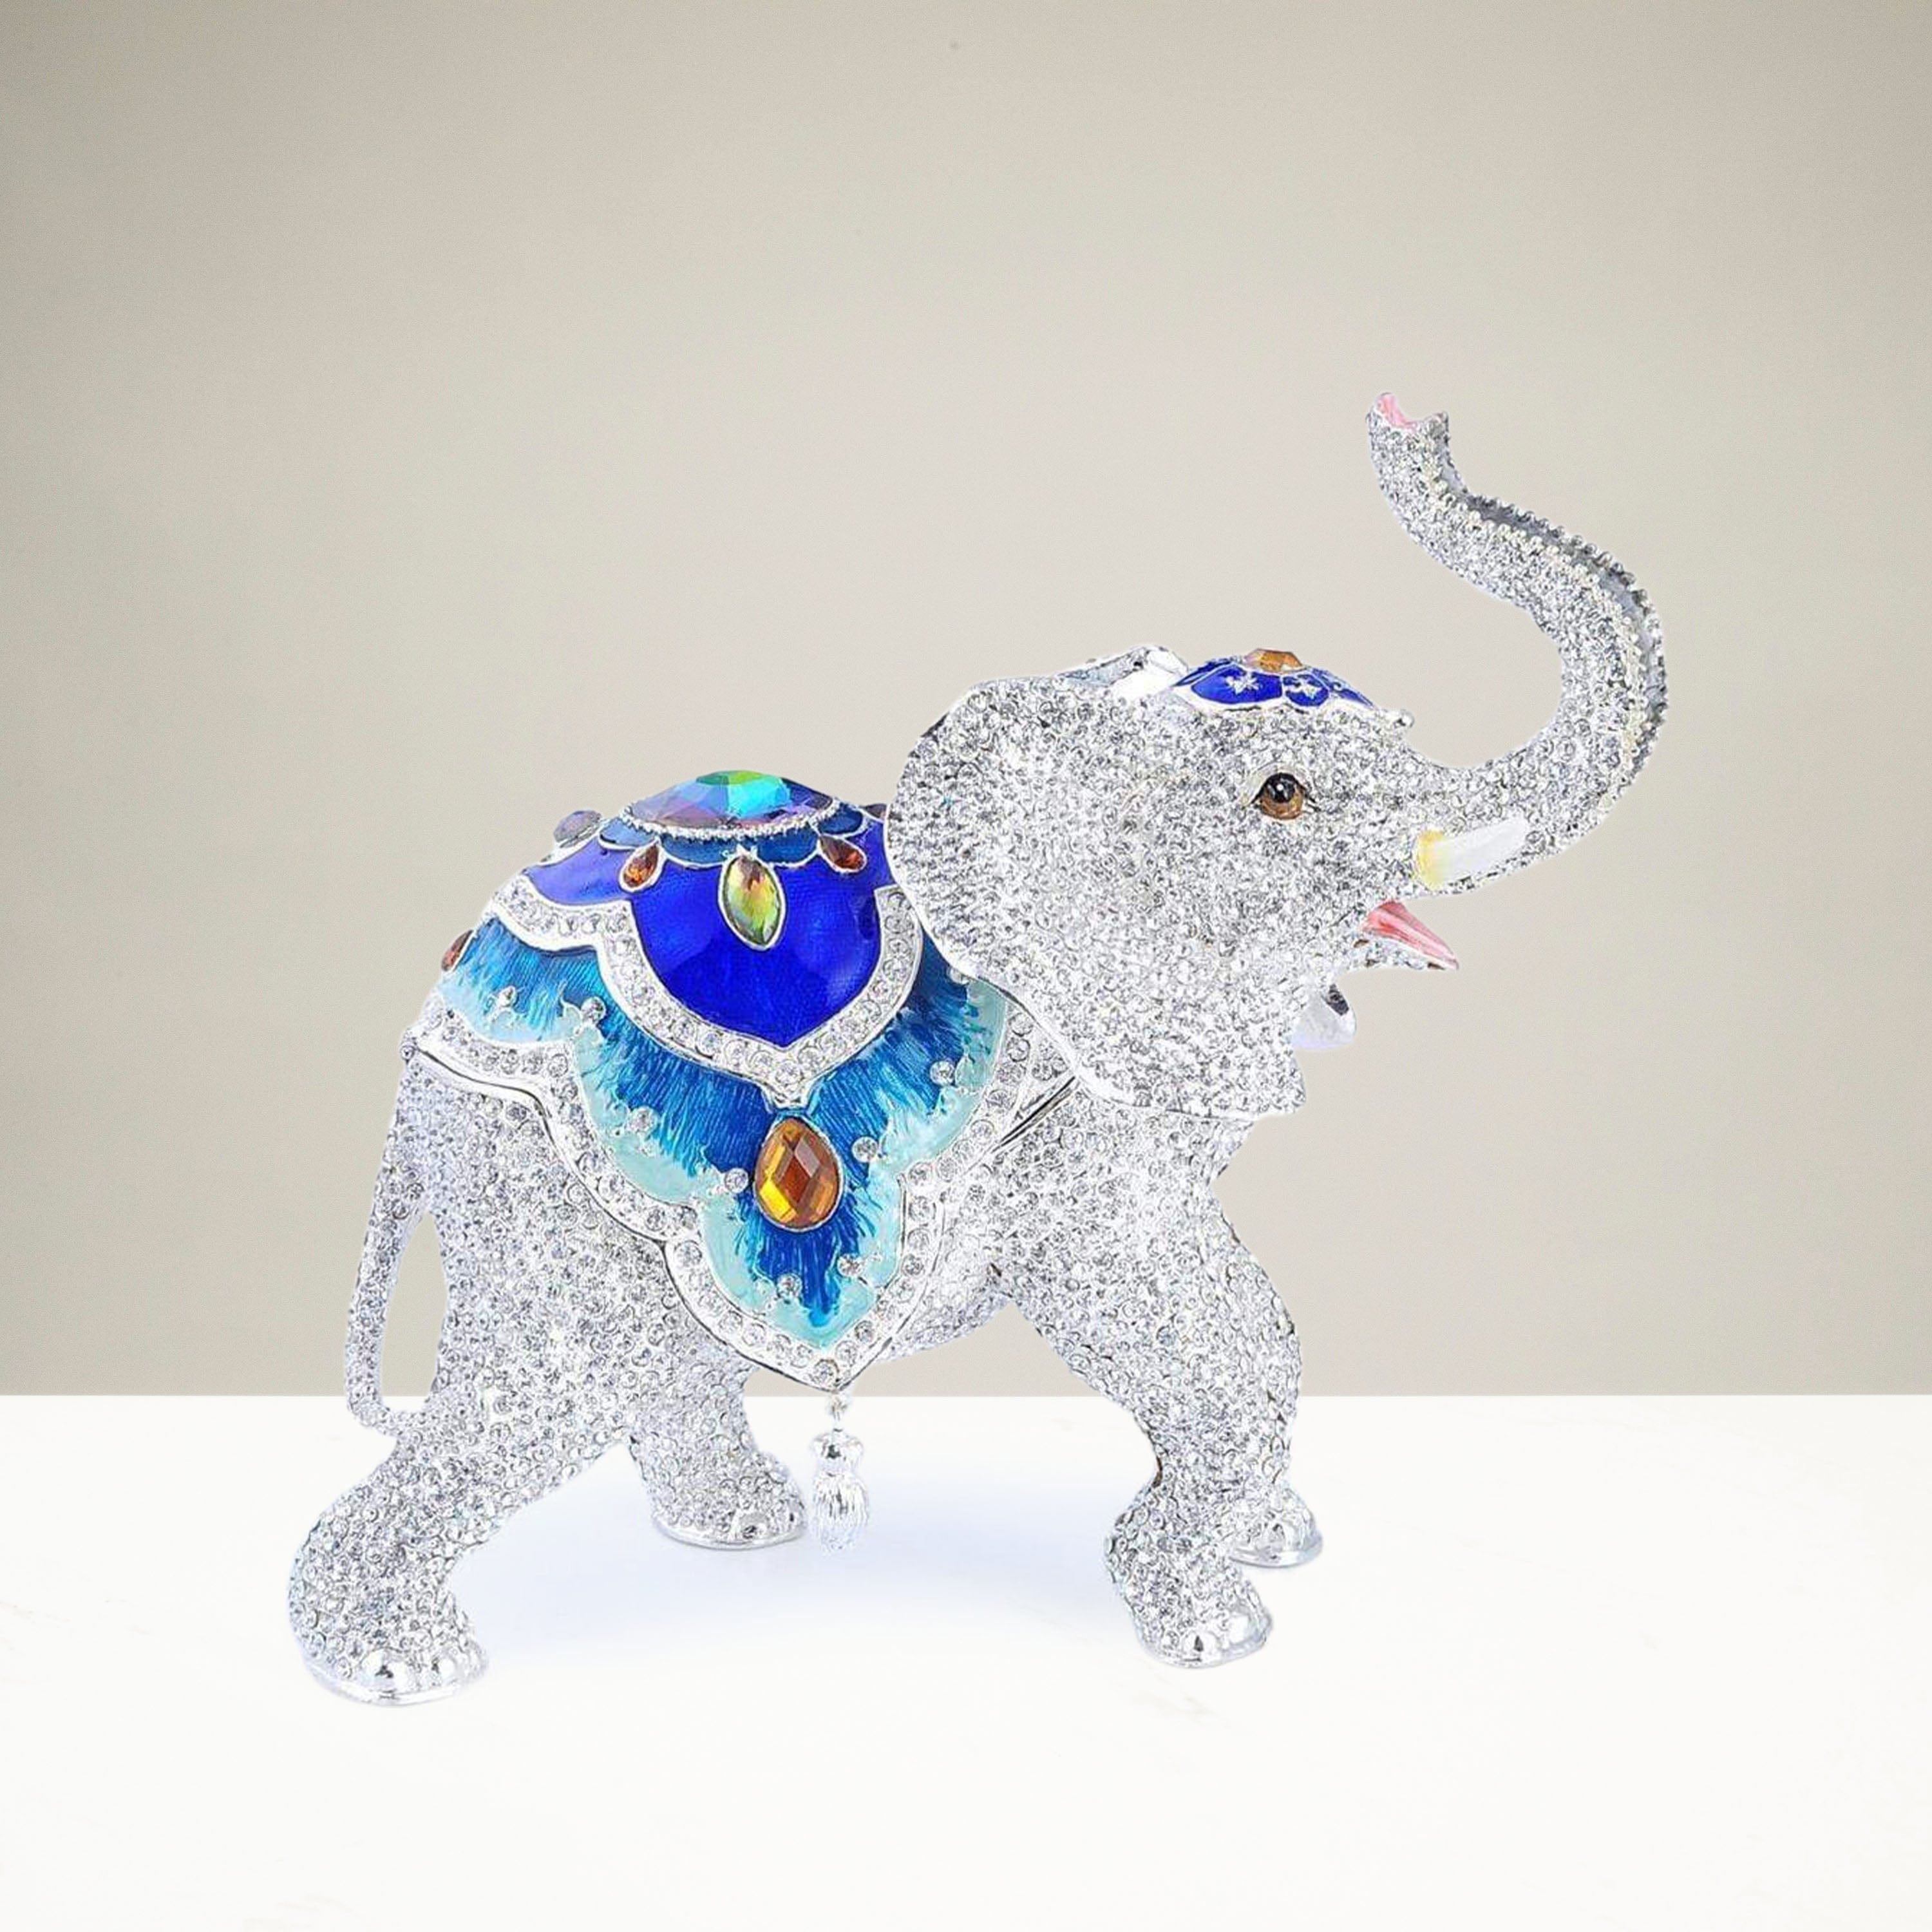 Kalifano Vanity Figurine White Elephant Figurine Keepsake Box made with Crystals SVA-083